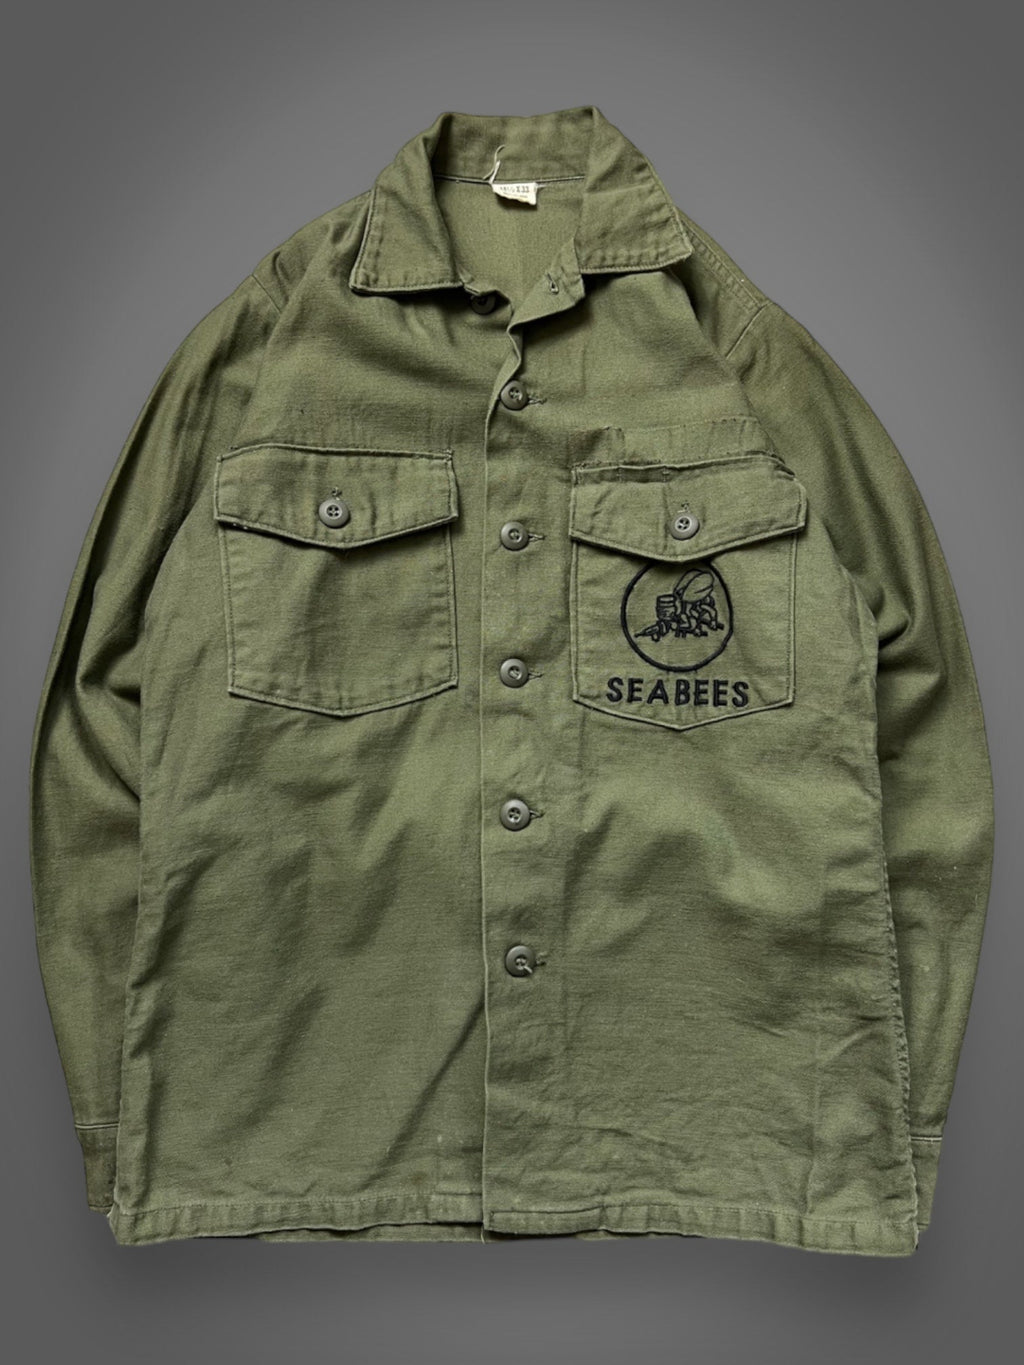 OG 107 Seabees button down shirt M